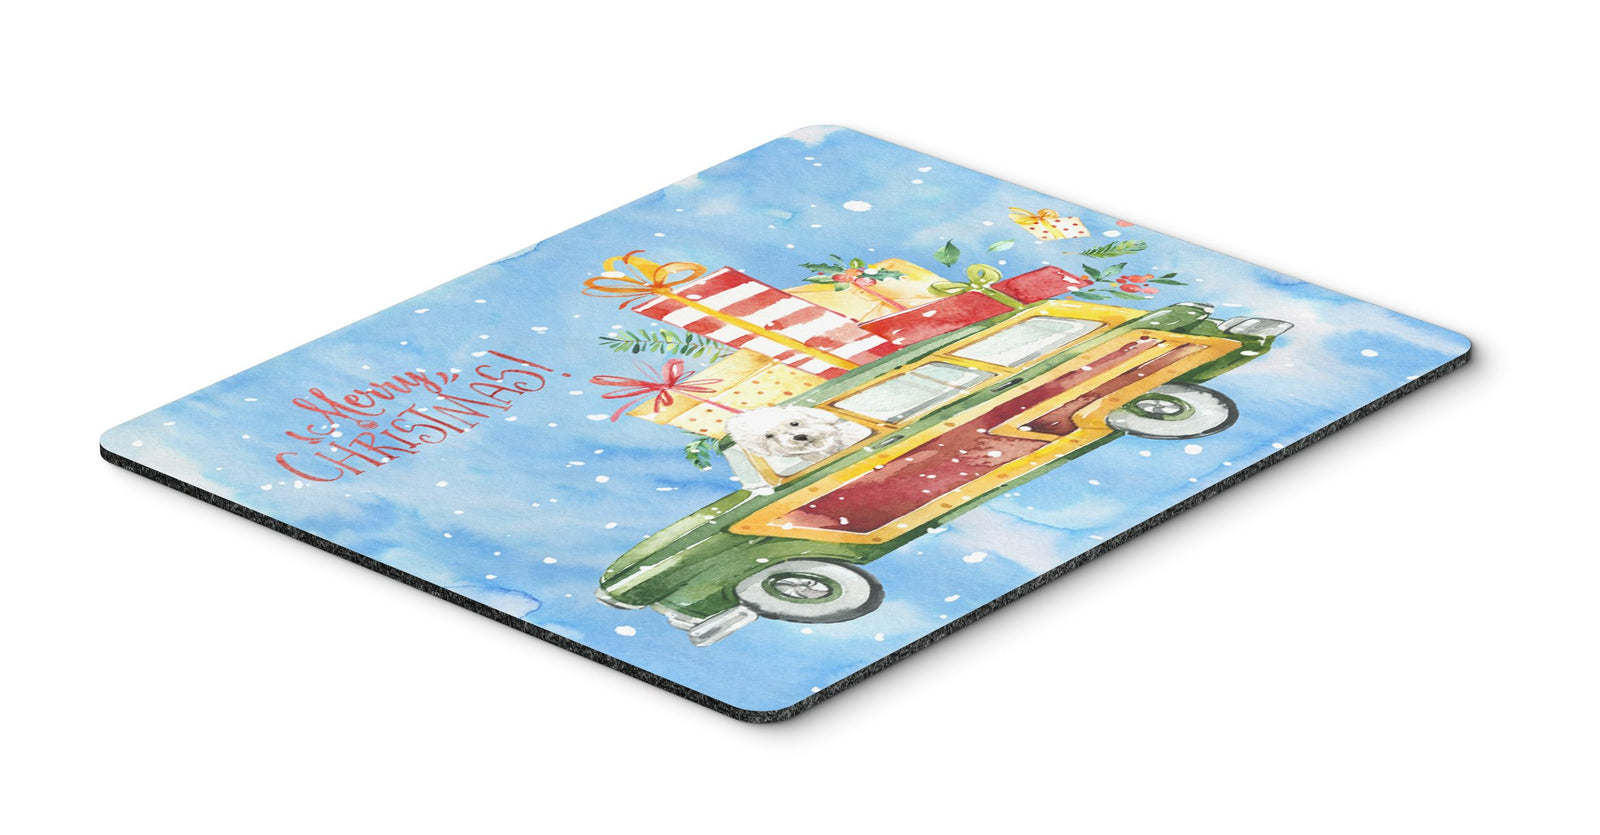 Merry Christmas Bichon Frisé Mouse Pad, Hot Pad or Trivet CK2395MP by Caroline's Treasures